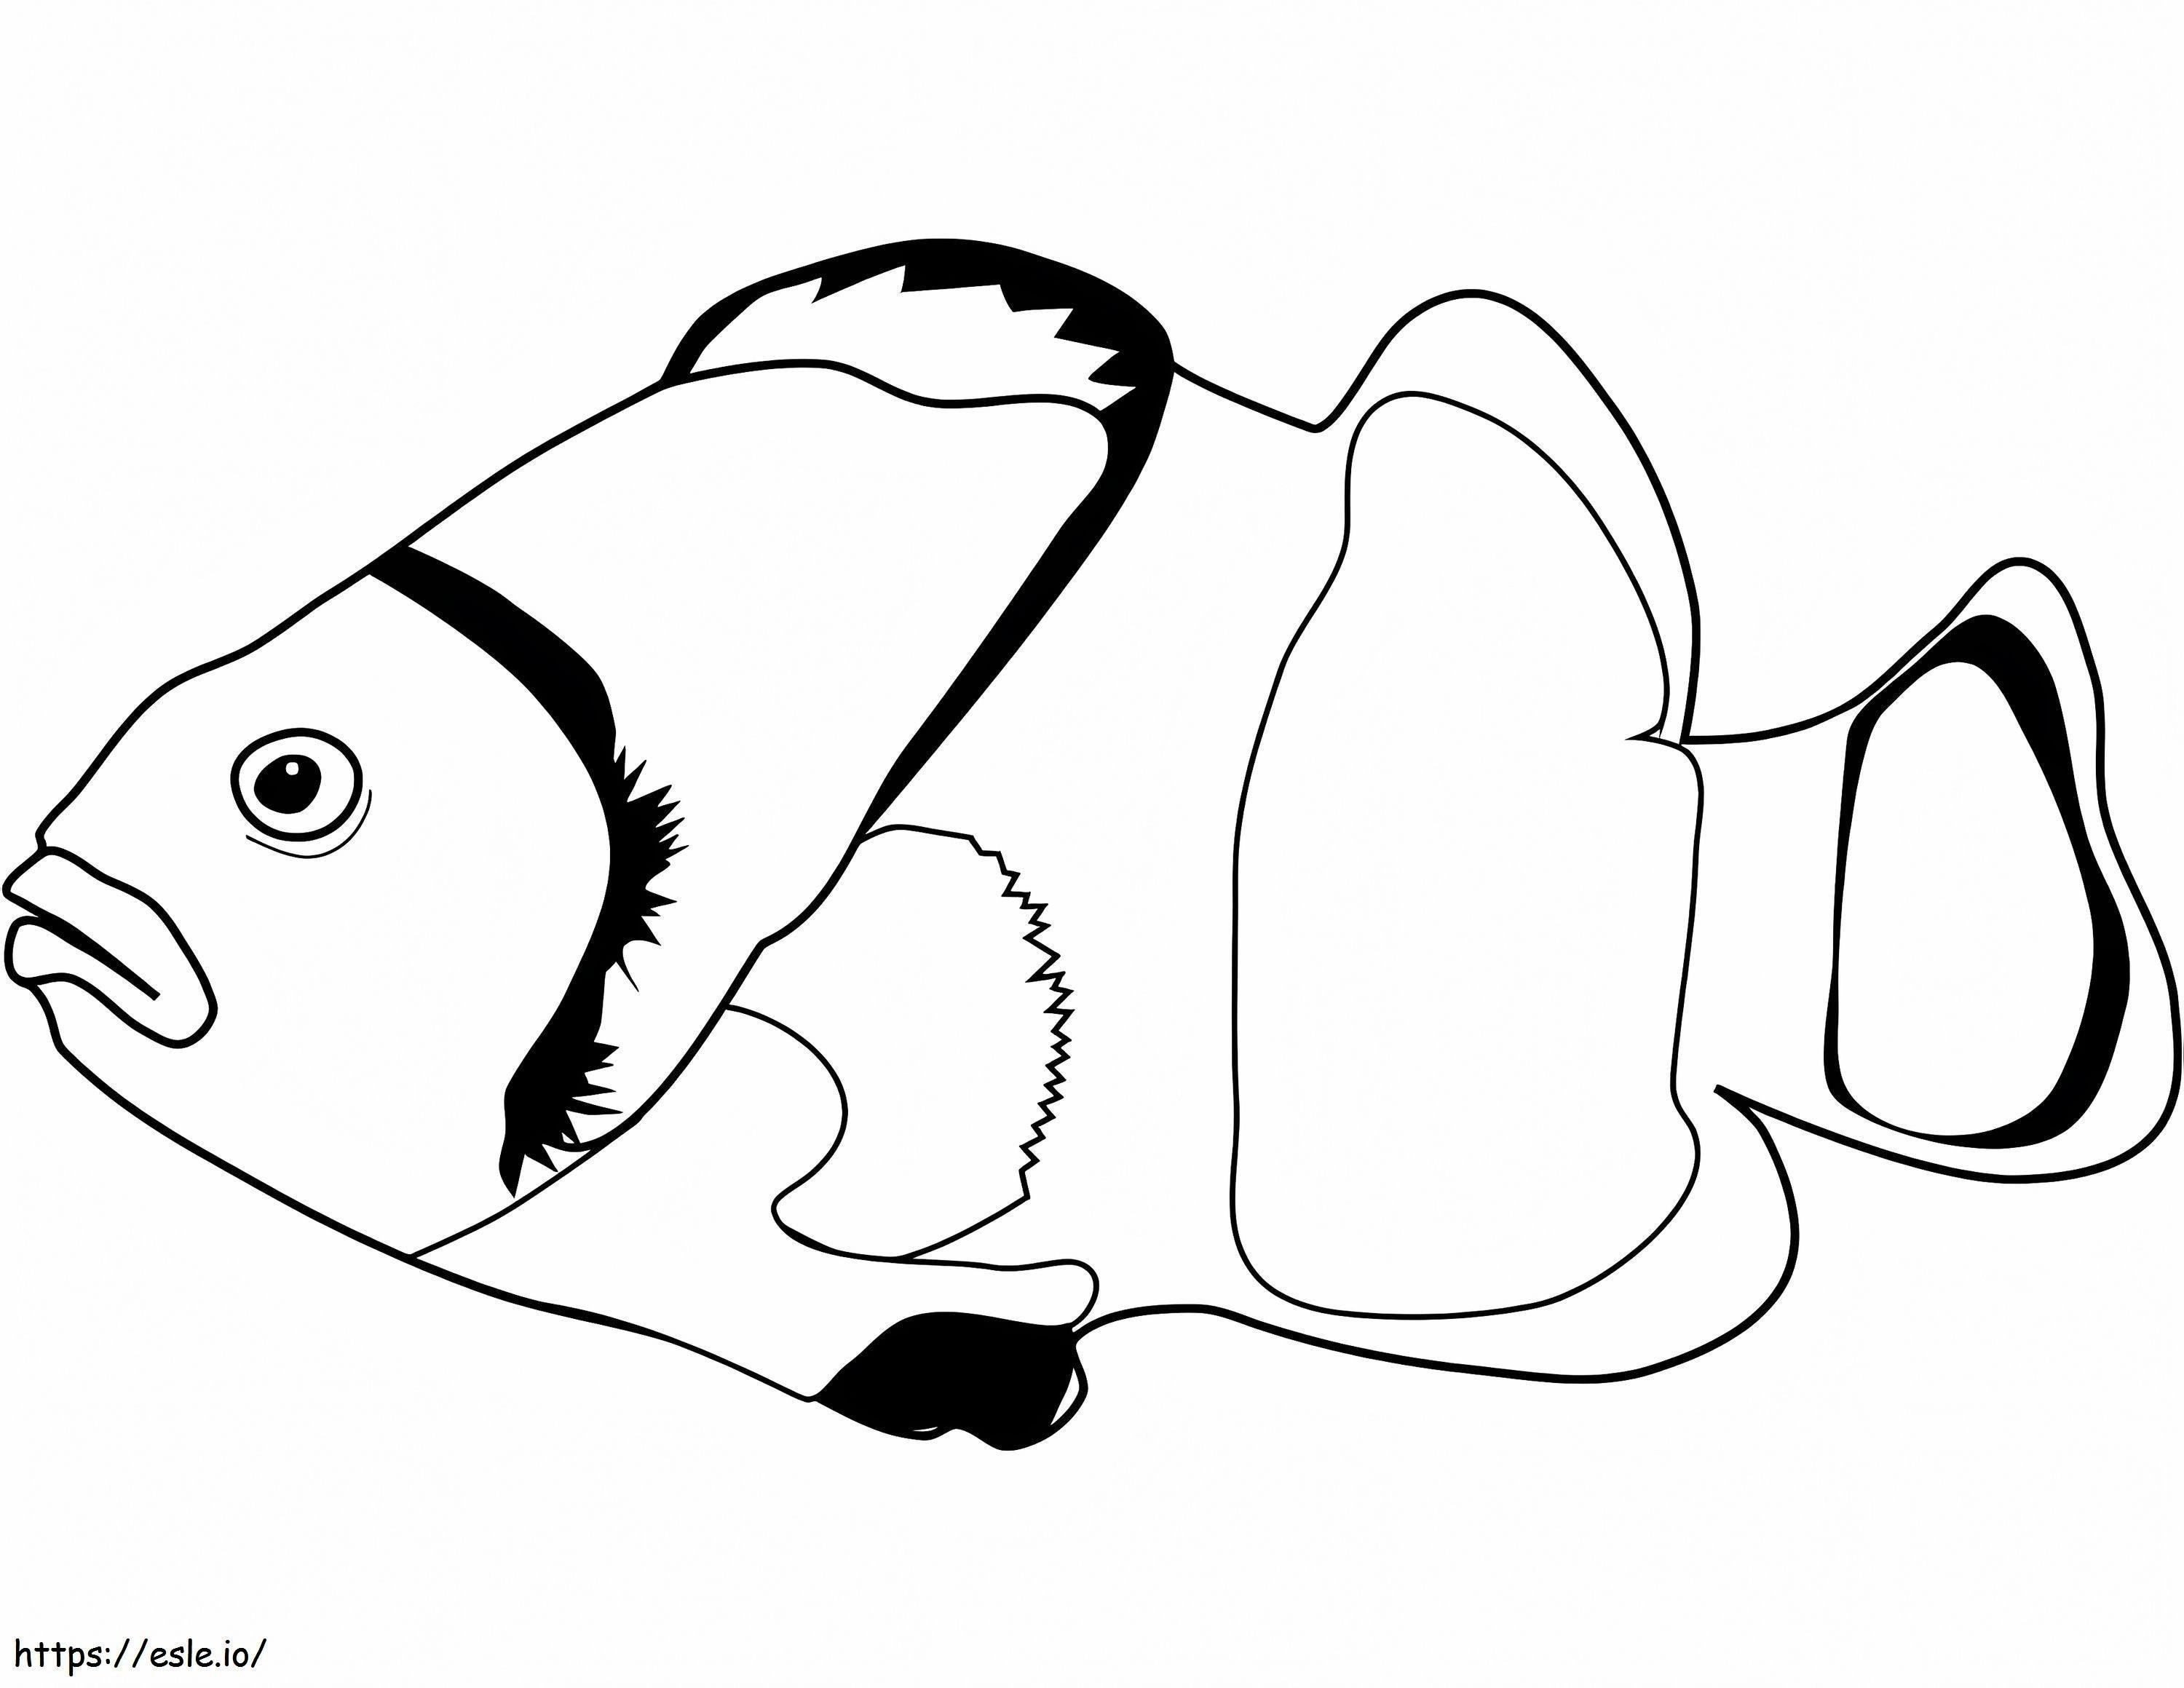 Peixe-palhaço normal para colorir